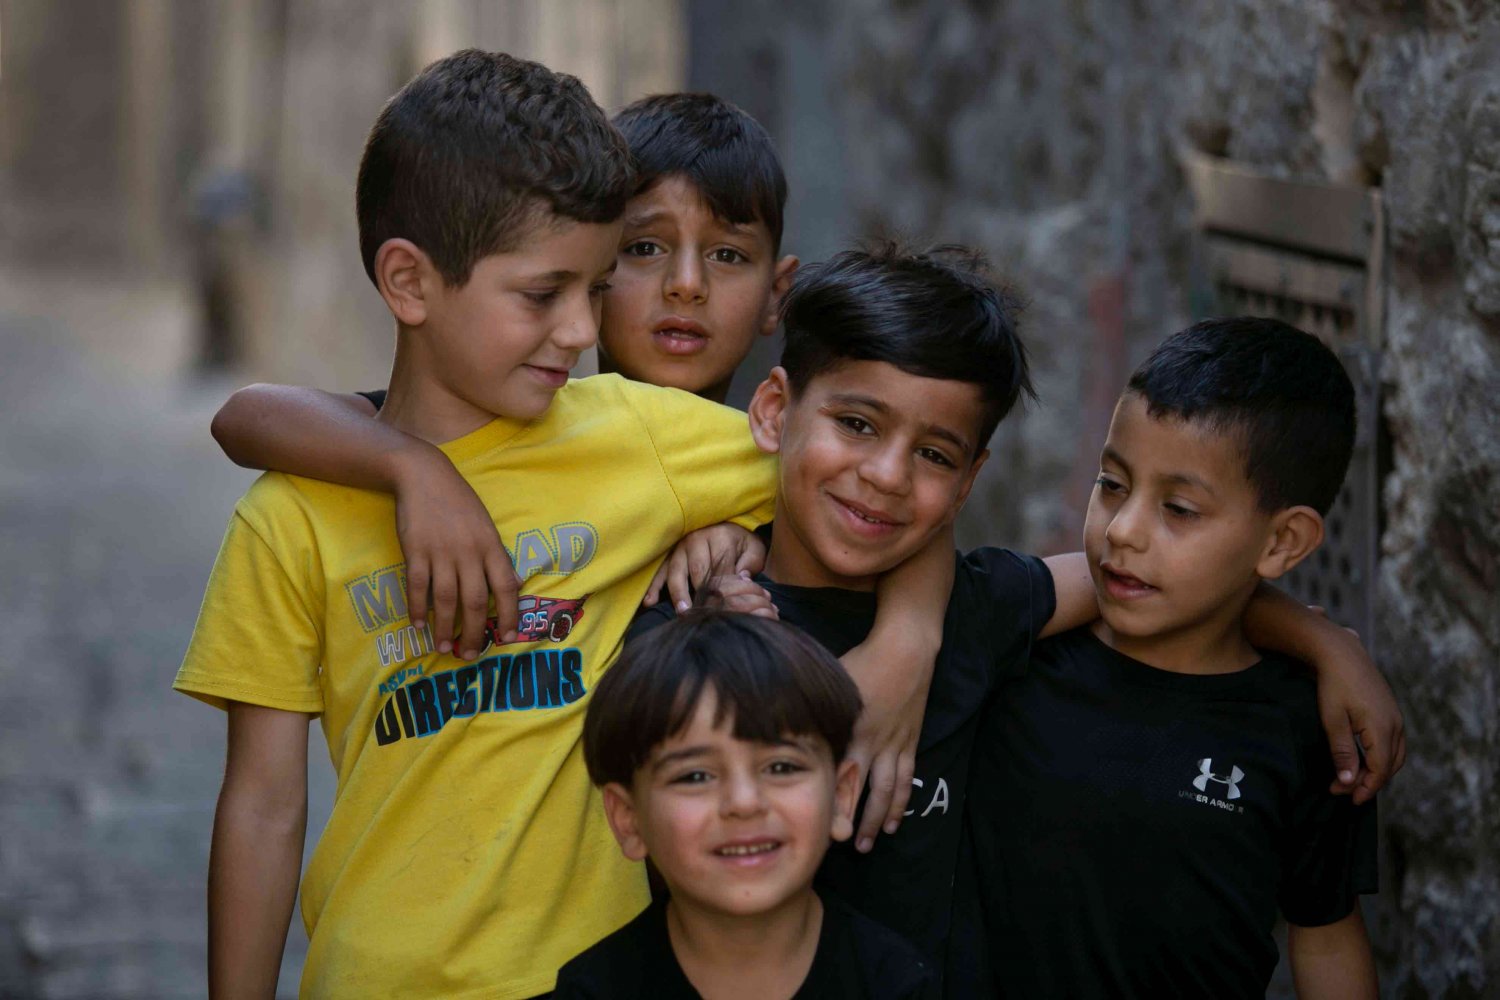 Palestinian boys hang out in Jerusalem's Old City, 2021